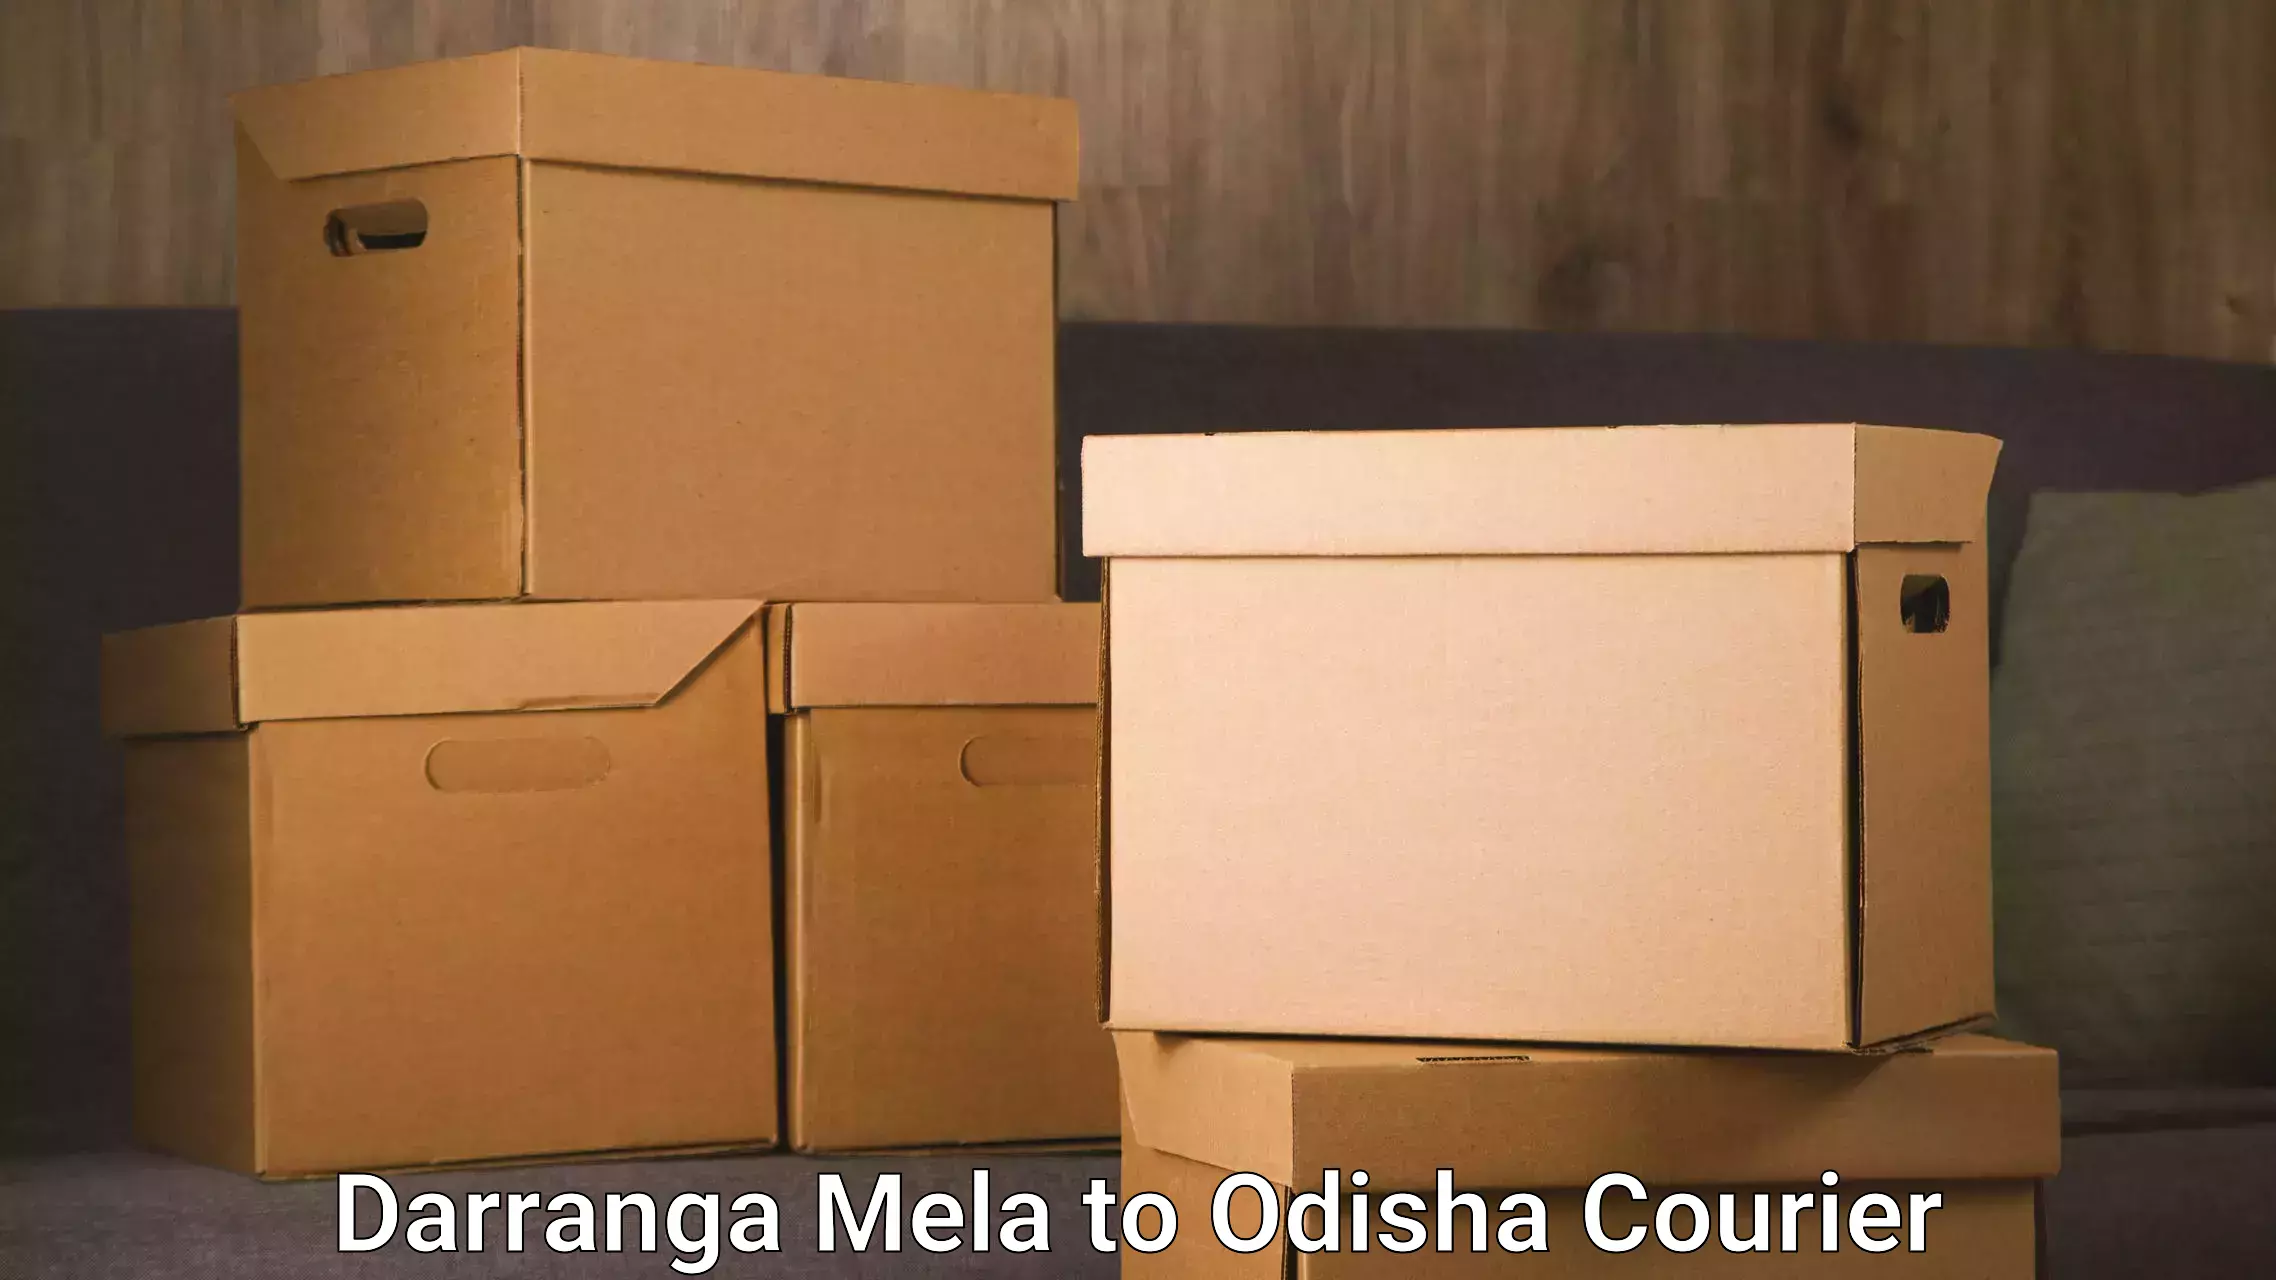 Easy access courier services in Darranga Mela to Jaipatna